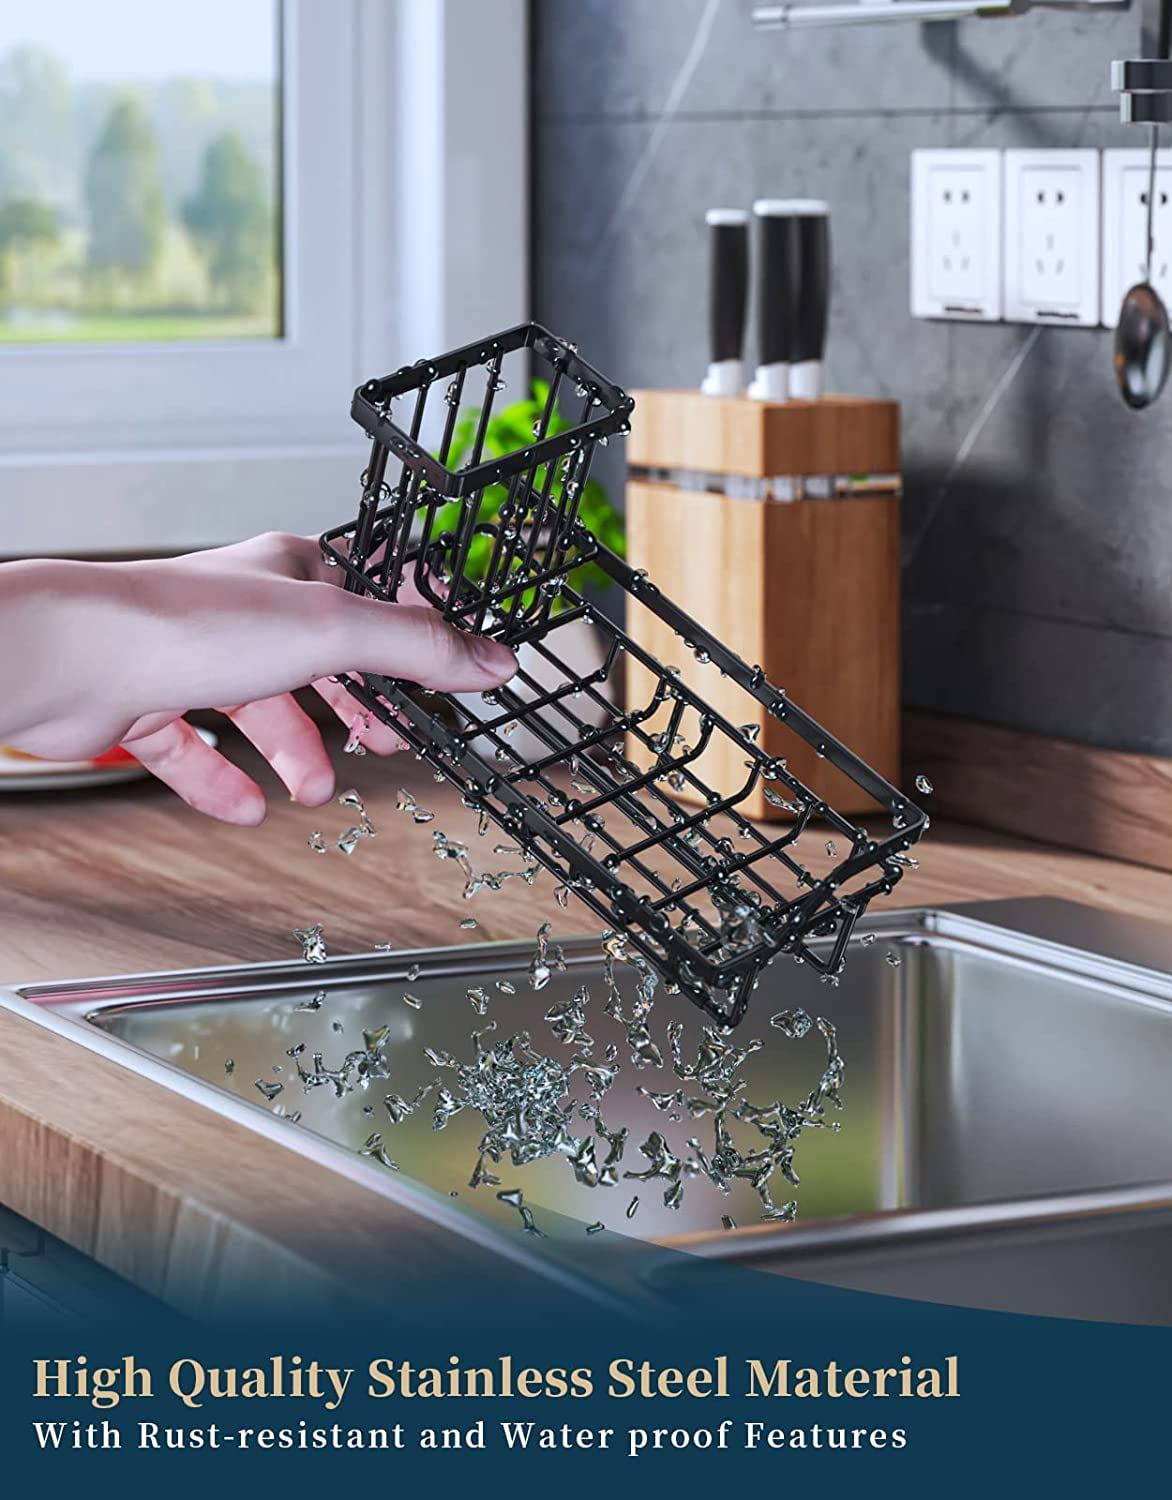 HULISEN Sponge Holder + Dish Brush Holder, 3-in-1 Kitchen Sink